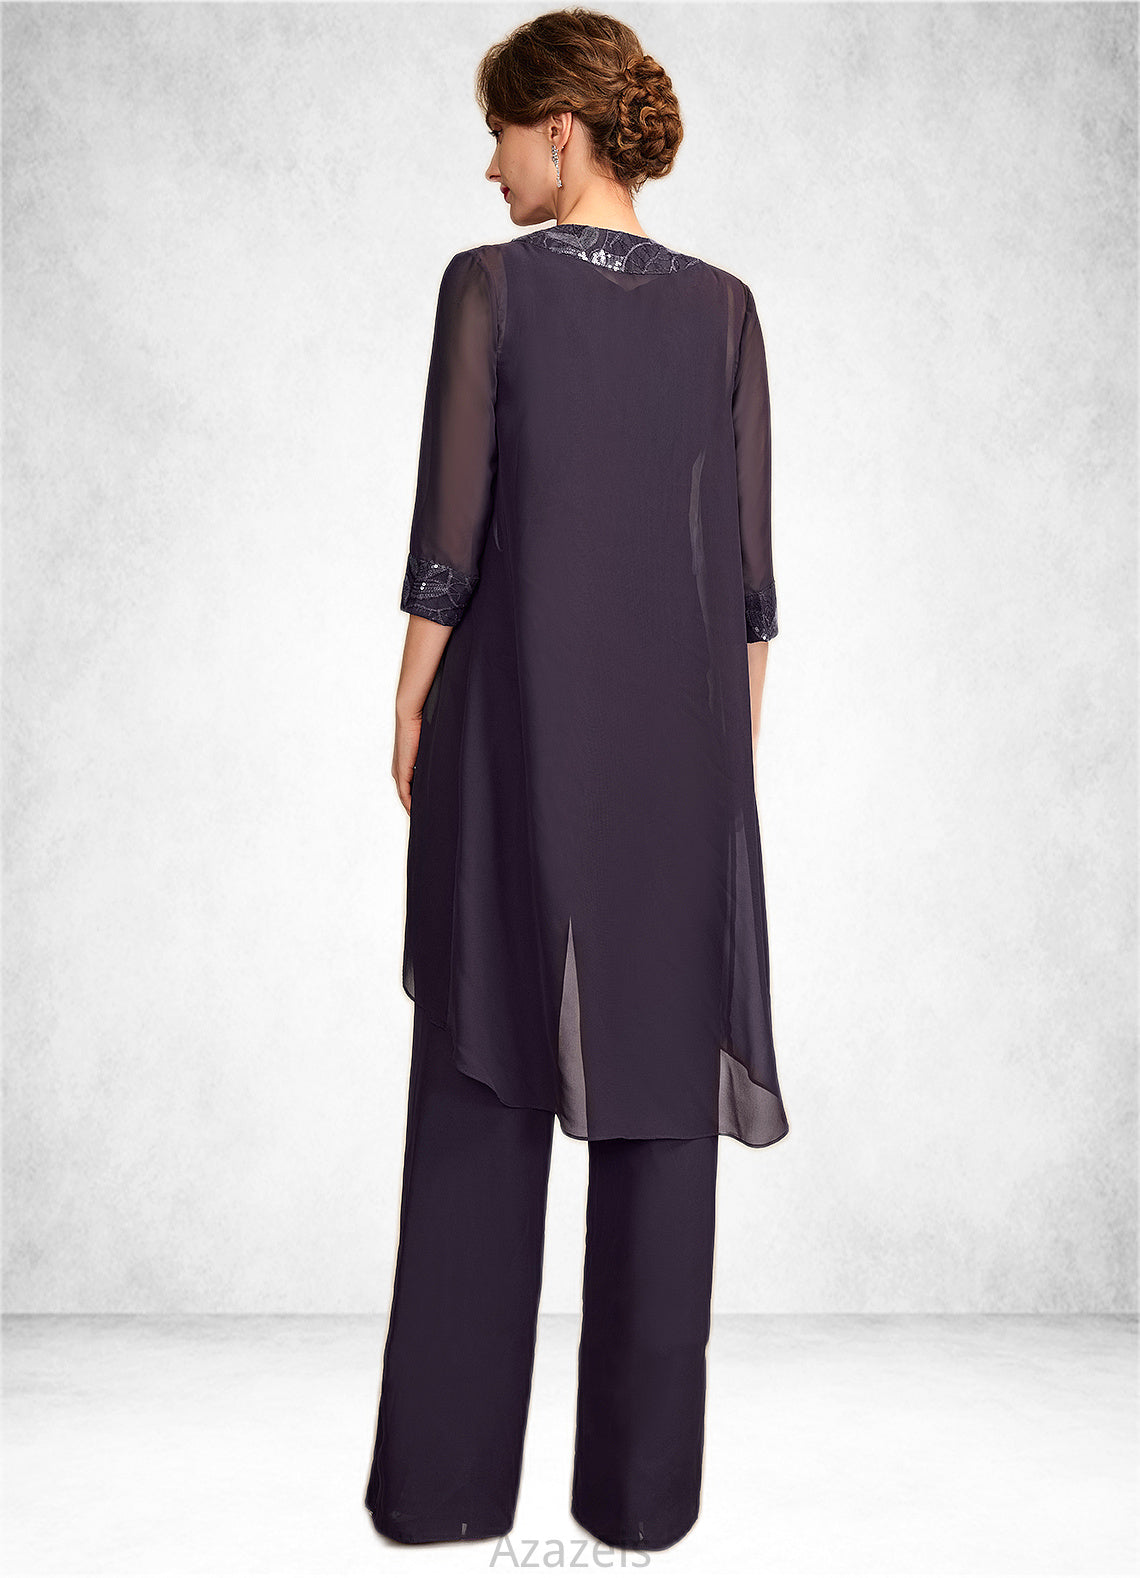 Rowan Jumpsuit/Pantsuit Scoop Neck Floor-Length Chiffon Lace Mother of the Bride Dress With Sequins DF126P0015010